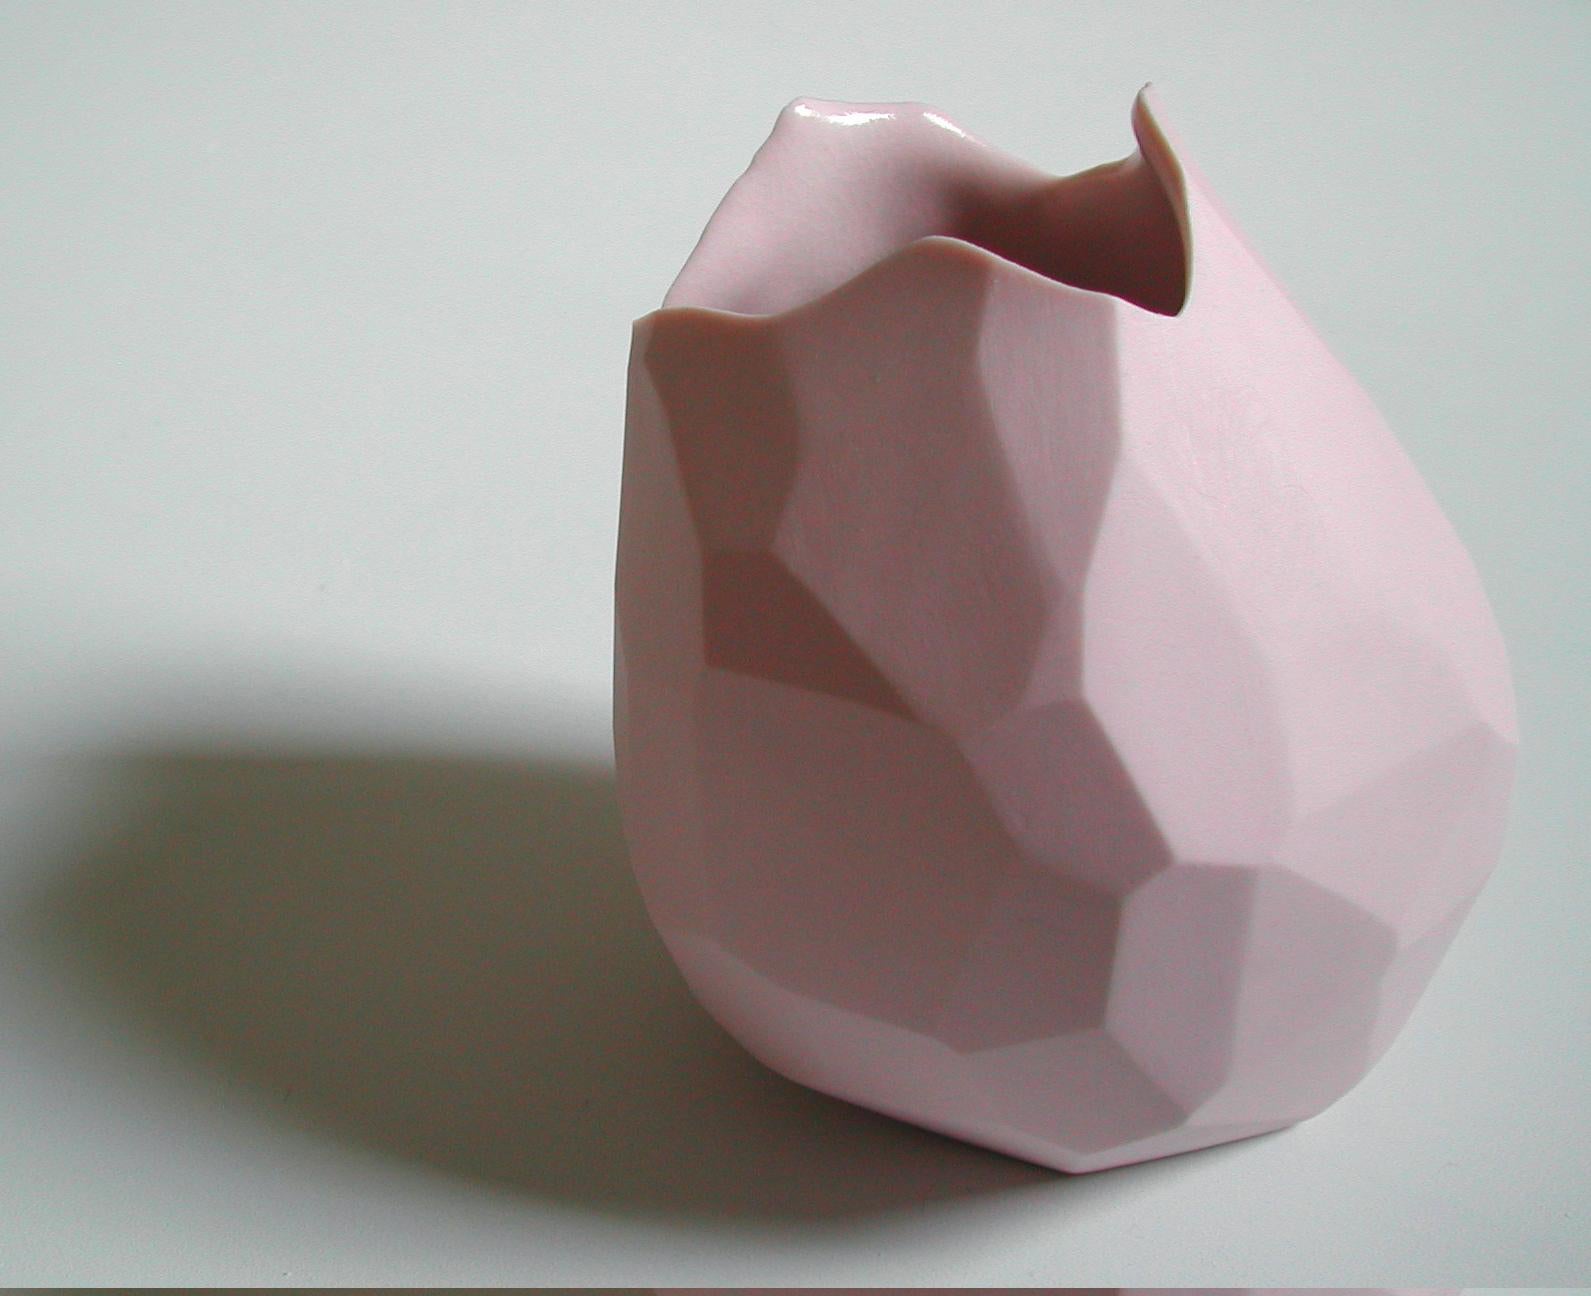 American Facet Vase in Pink Porcelain by David Wiseman, 2010